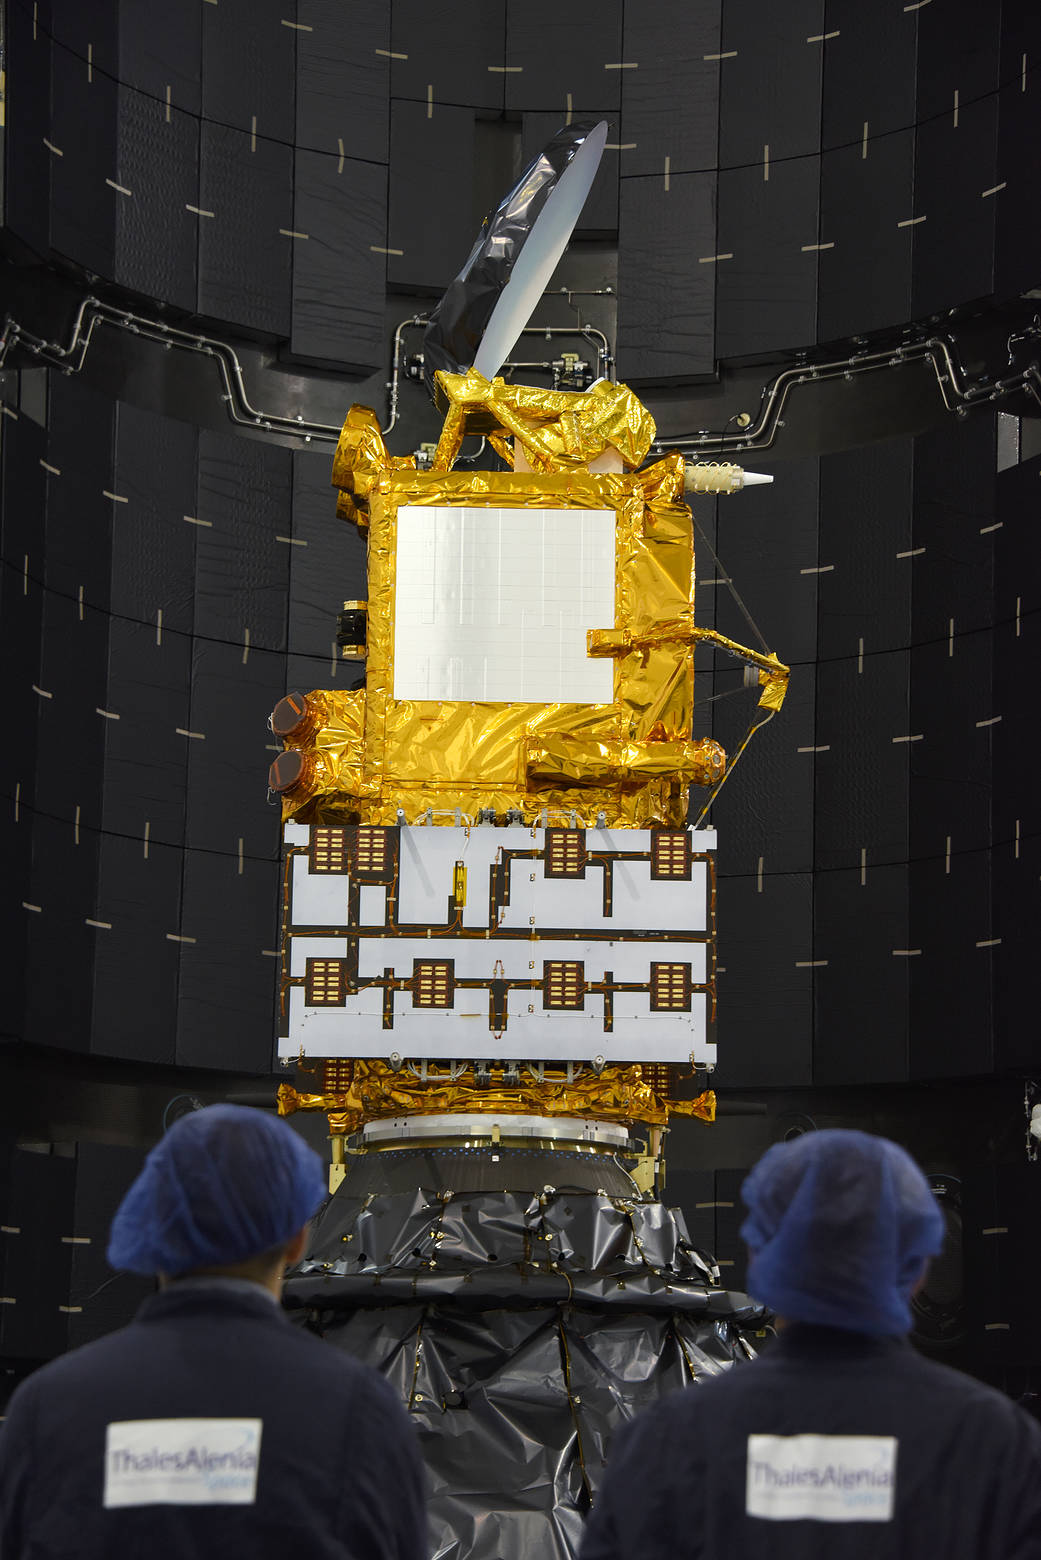 Jason-3 satellite inside payload fairing 